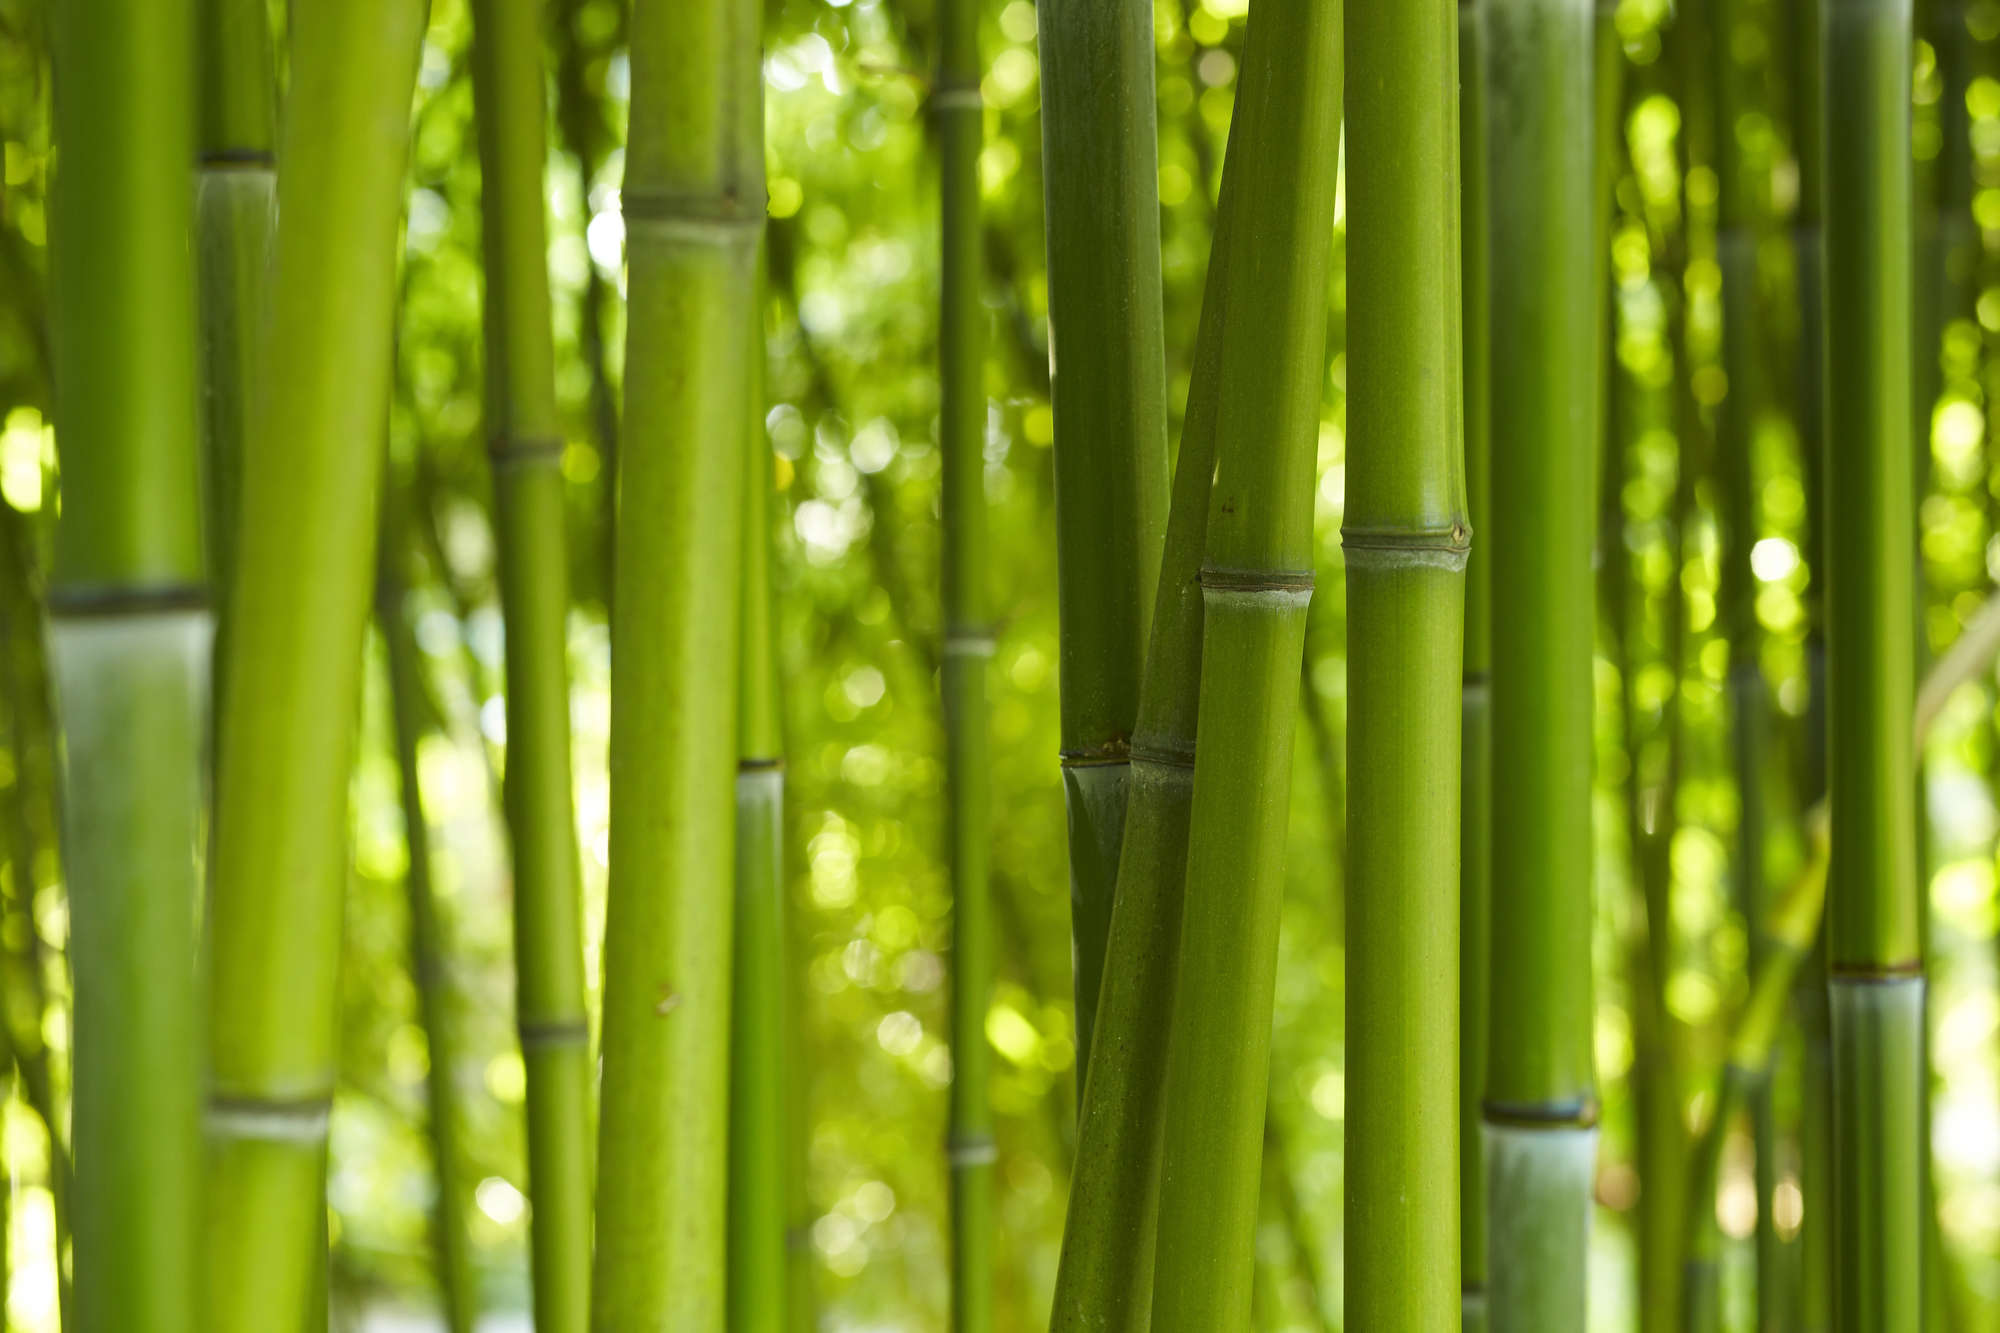             Papel pintado Naturaleza Bambú aggrappante plano sobre tejido no tejido liso mate
        